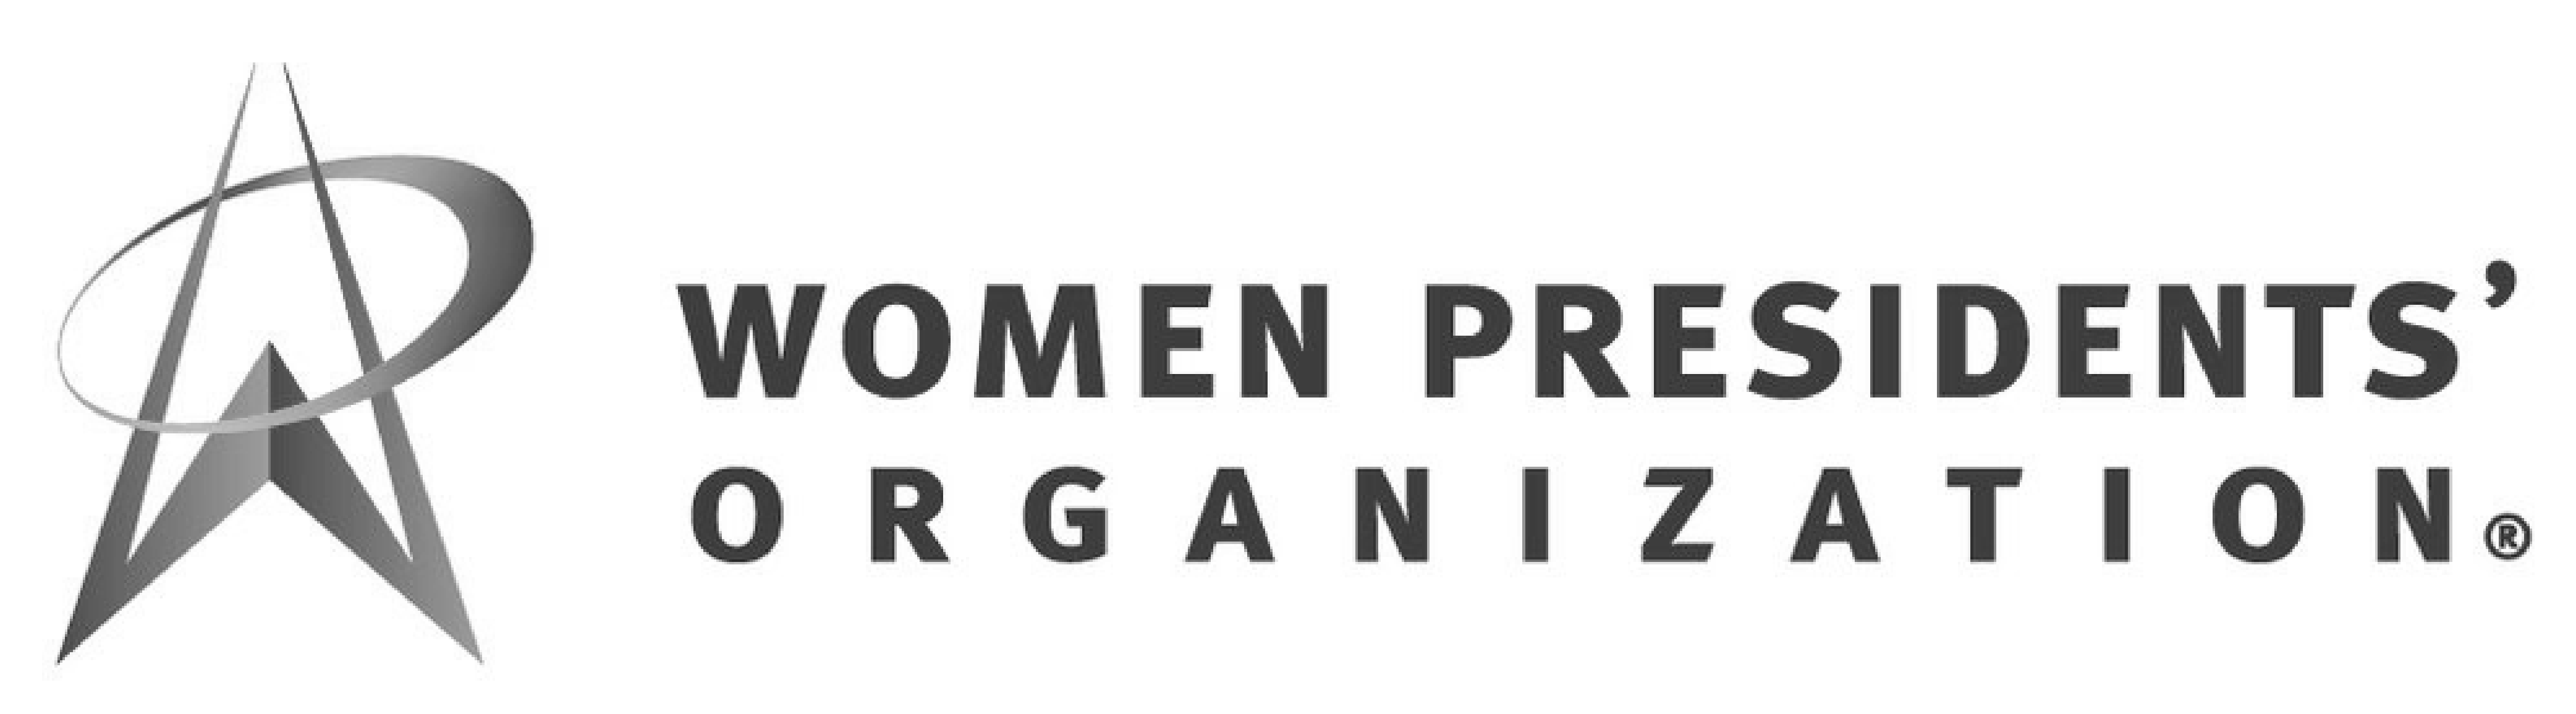 Women Presidents' Organization logo